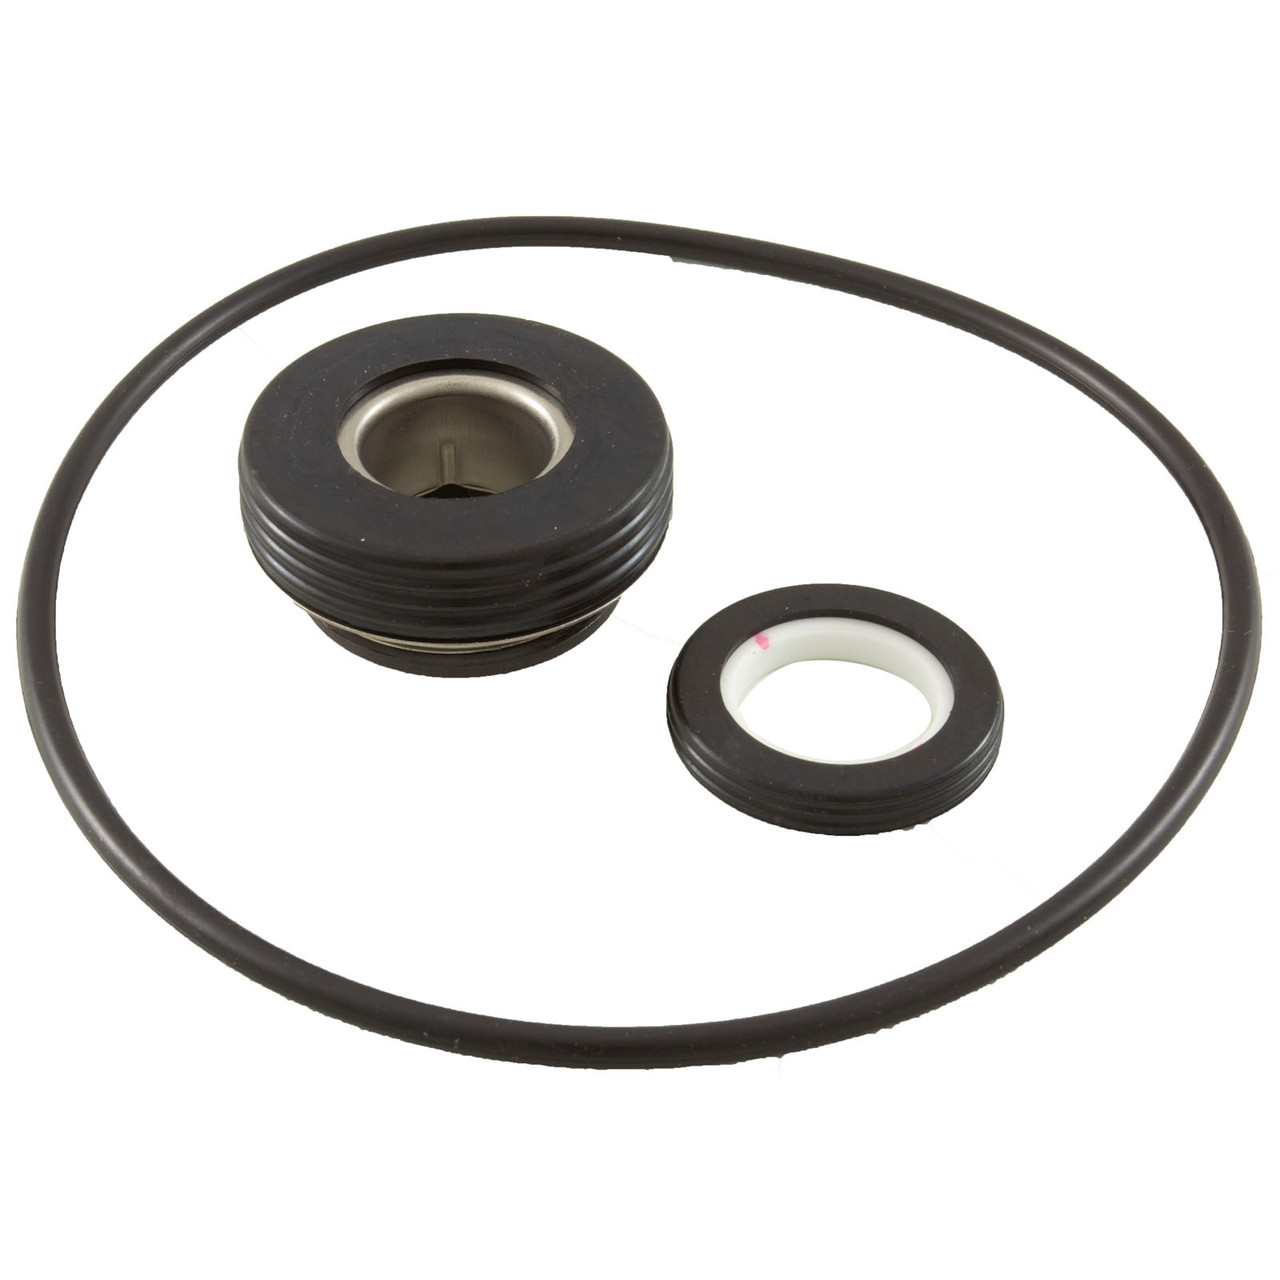 B K JAGAN & CO Water Pump Mechanical Seal Sealing Ring(Pack of 2) (16 MM) :  Amazon.in: Home & Kitchen